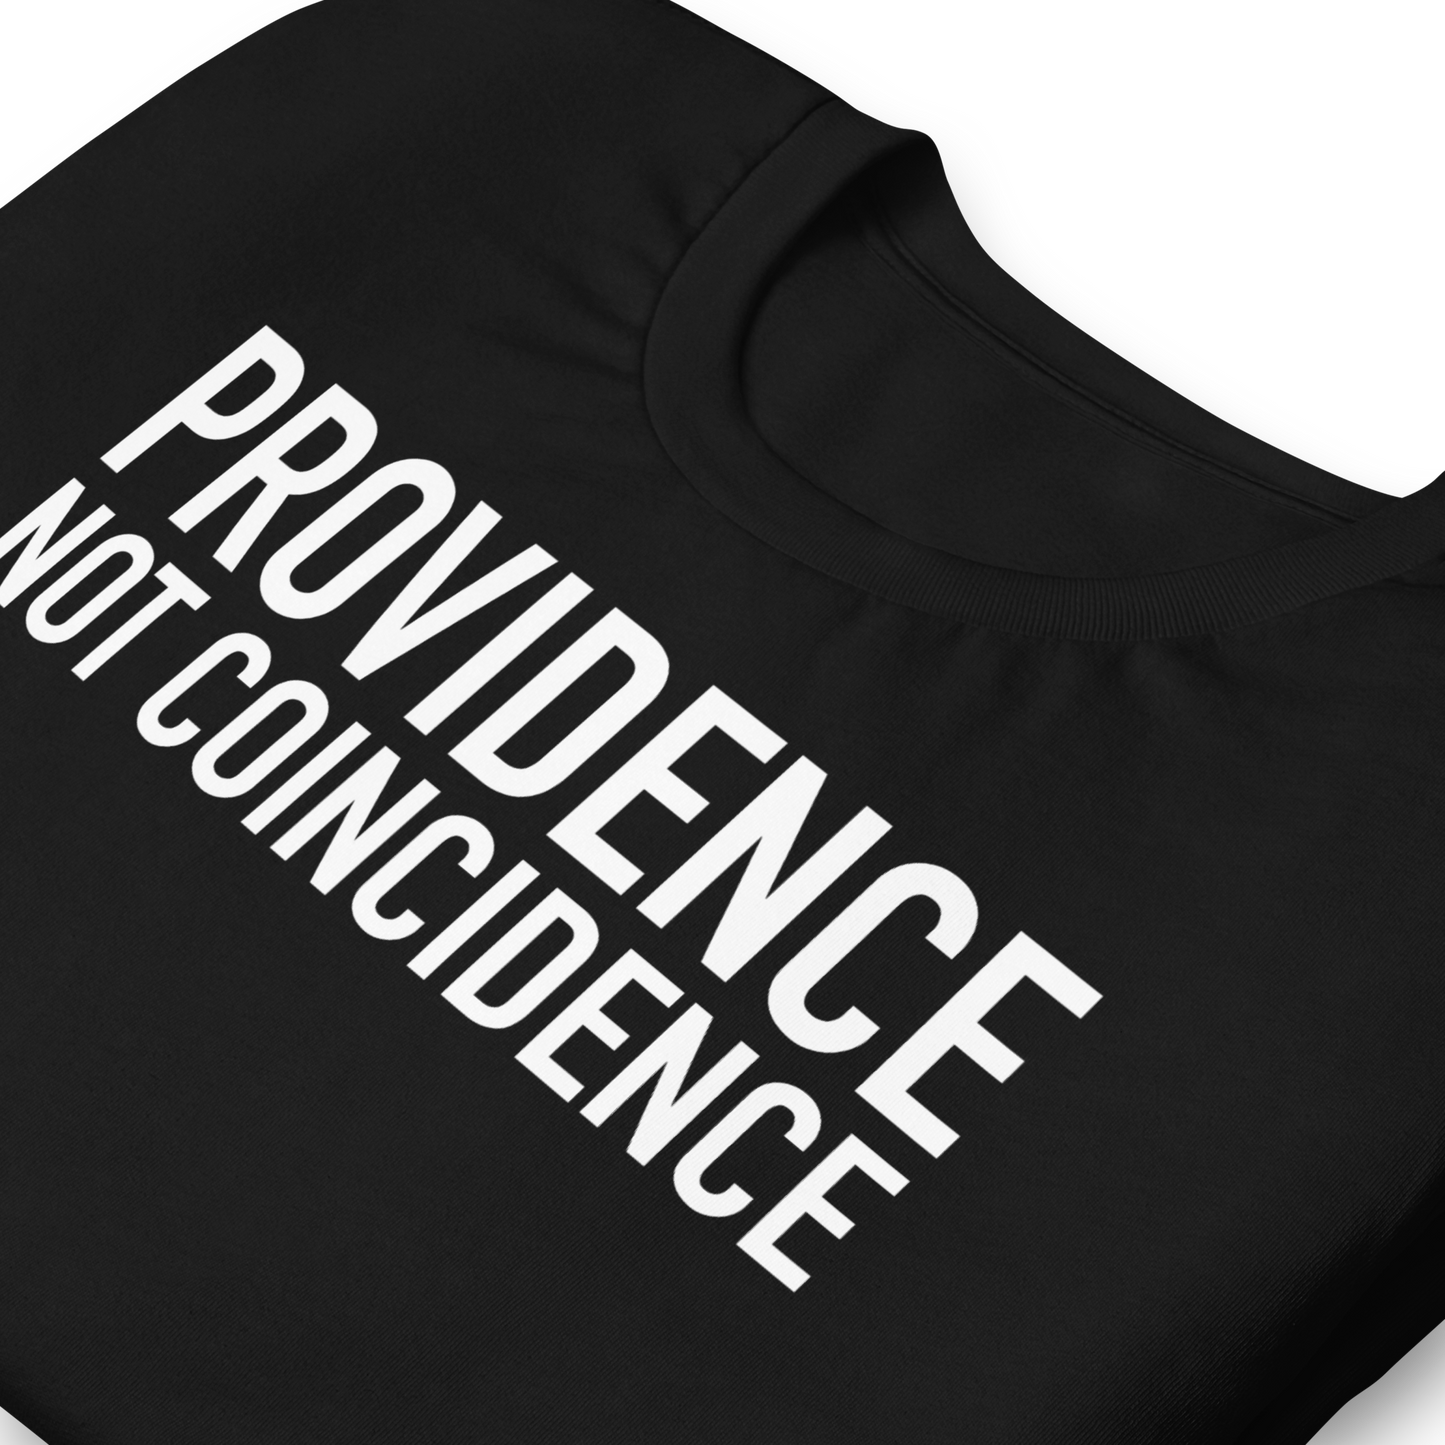 Unisex - Christian - Providence not Coincidence - T-shirt